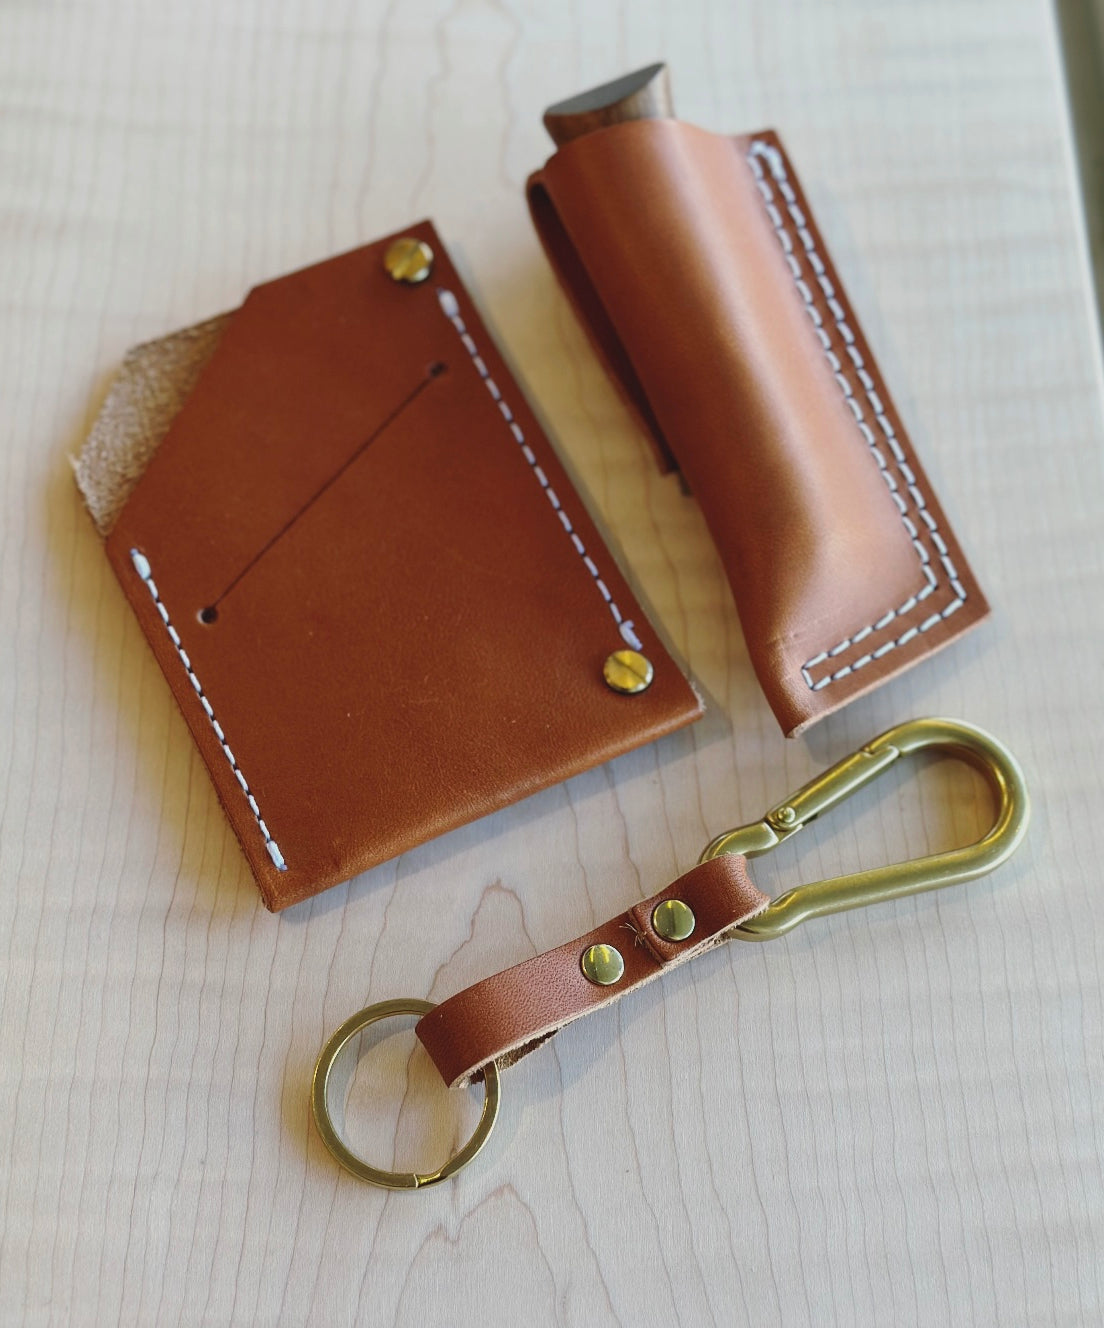 Everyday Carry Essentials Bundle | Tuxedo, Whiskey, Quebec